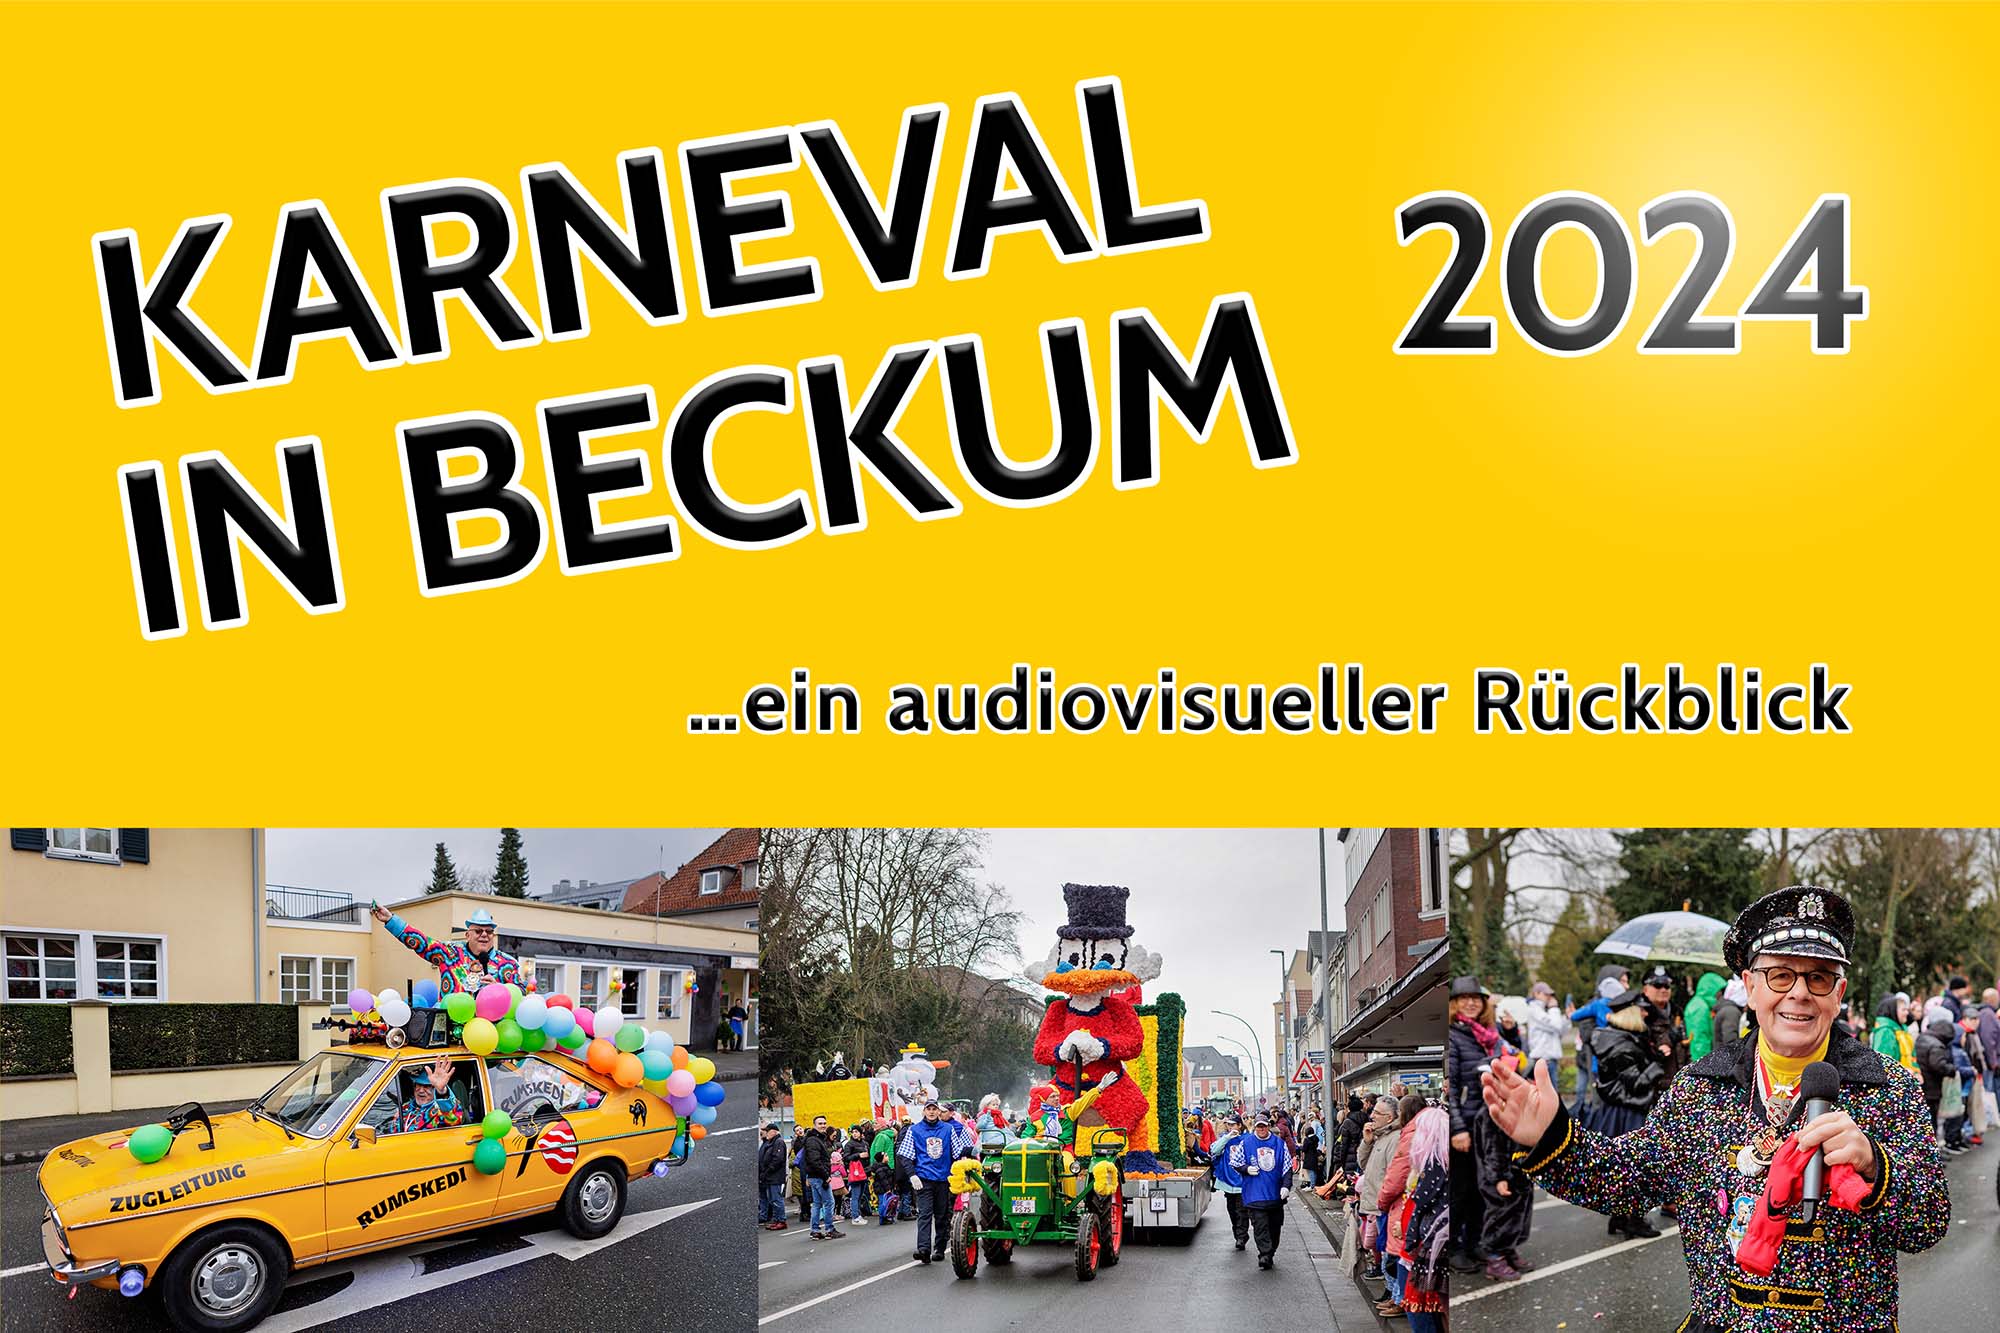 Karneval in Beckum 2024 - ein audiovisueller Rückblick